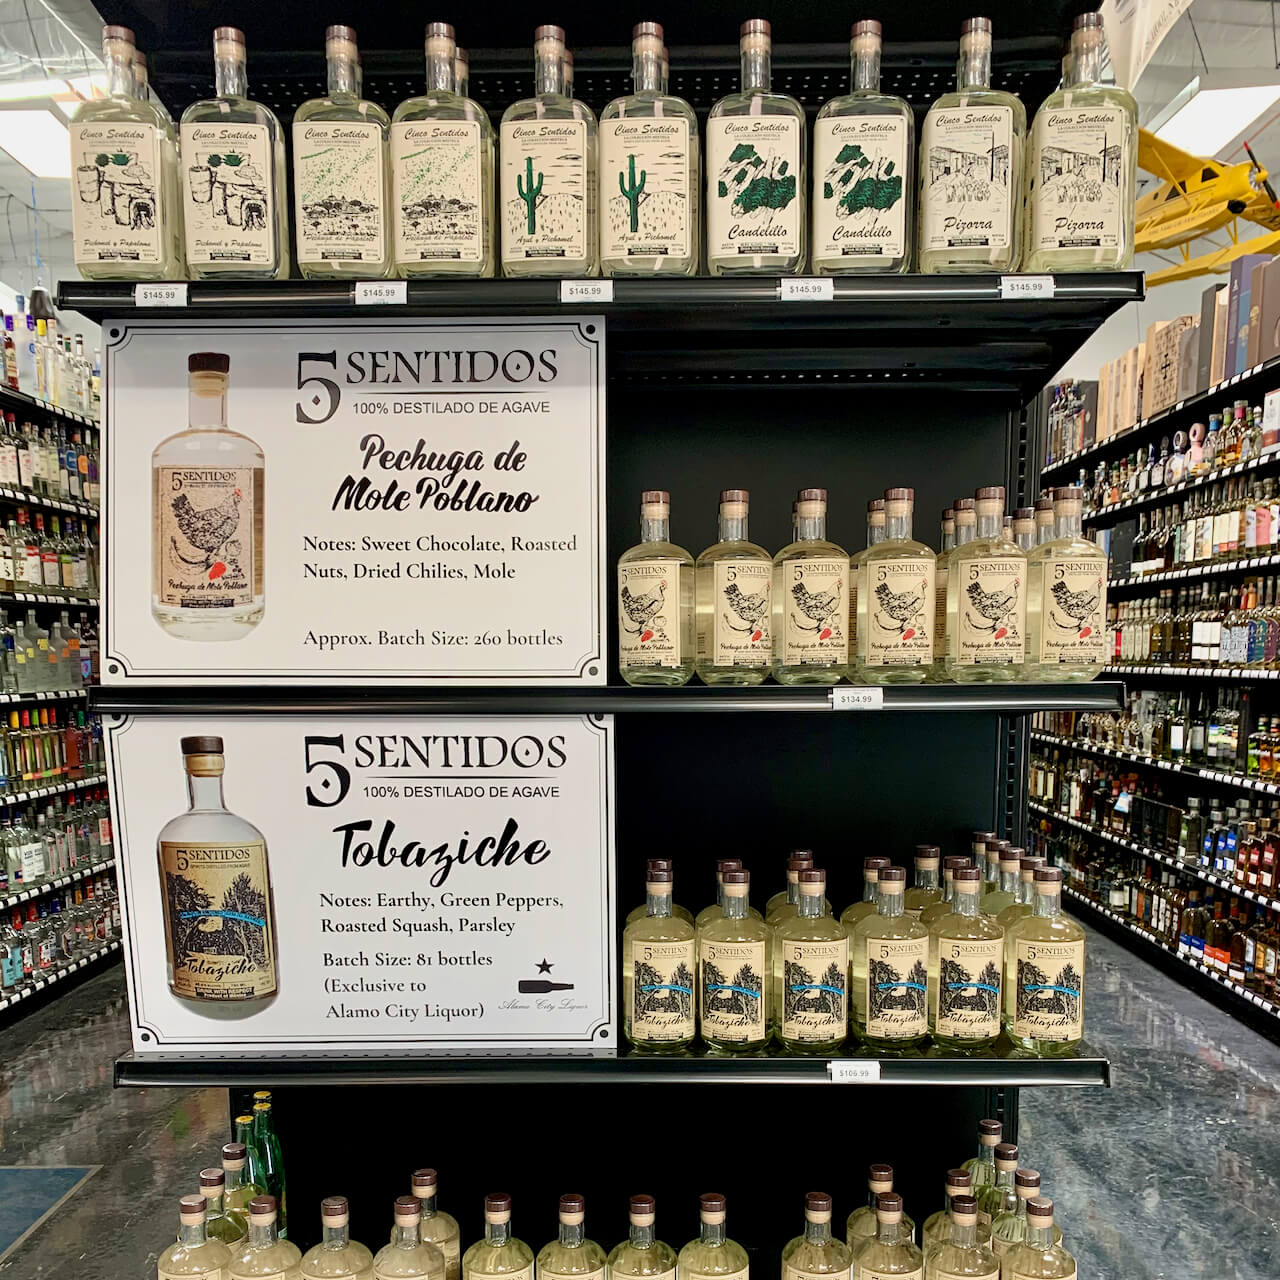 Special display of Cinco Sentidos bottles at Alamo City Liquor in San Antonio